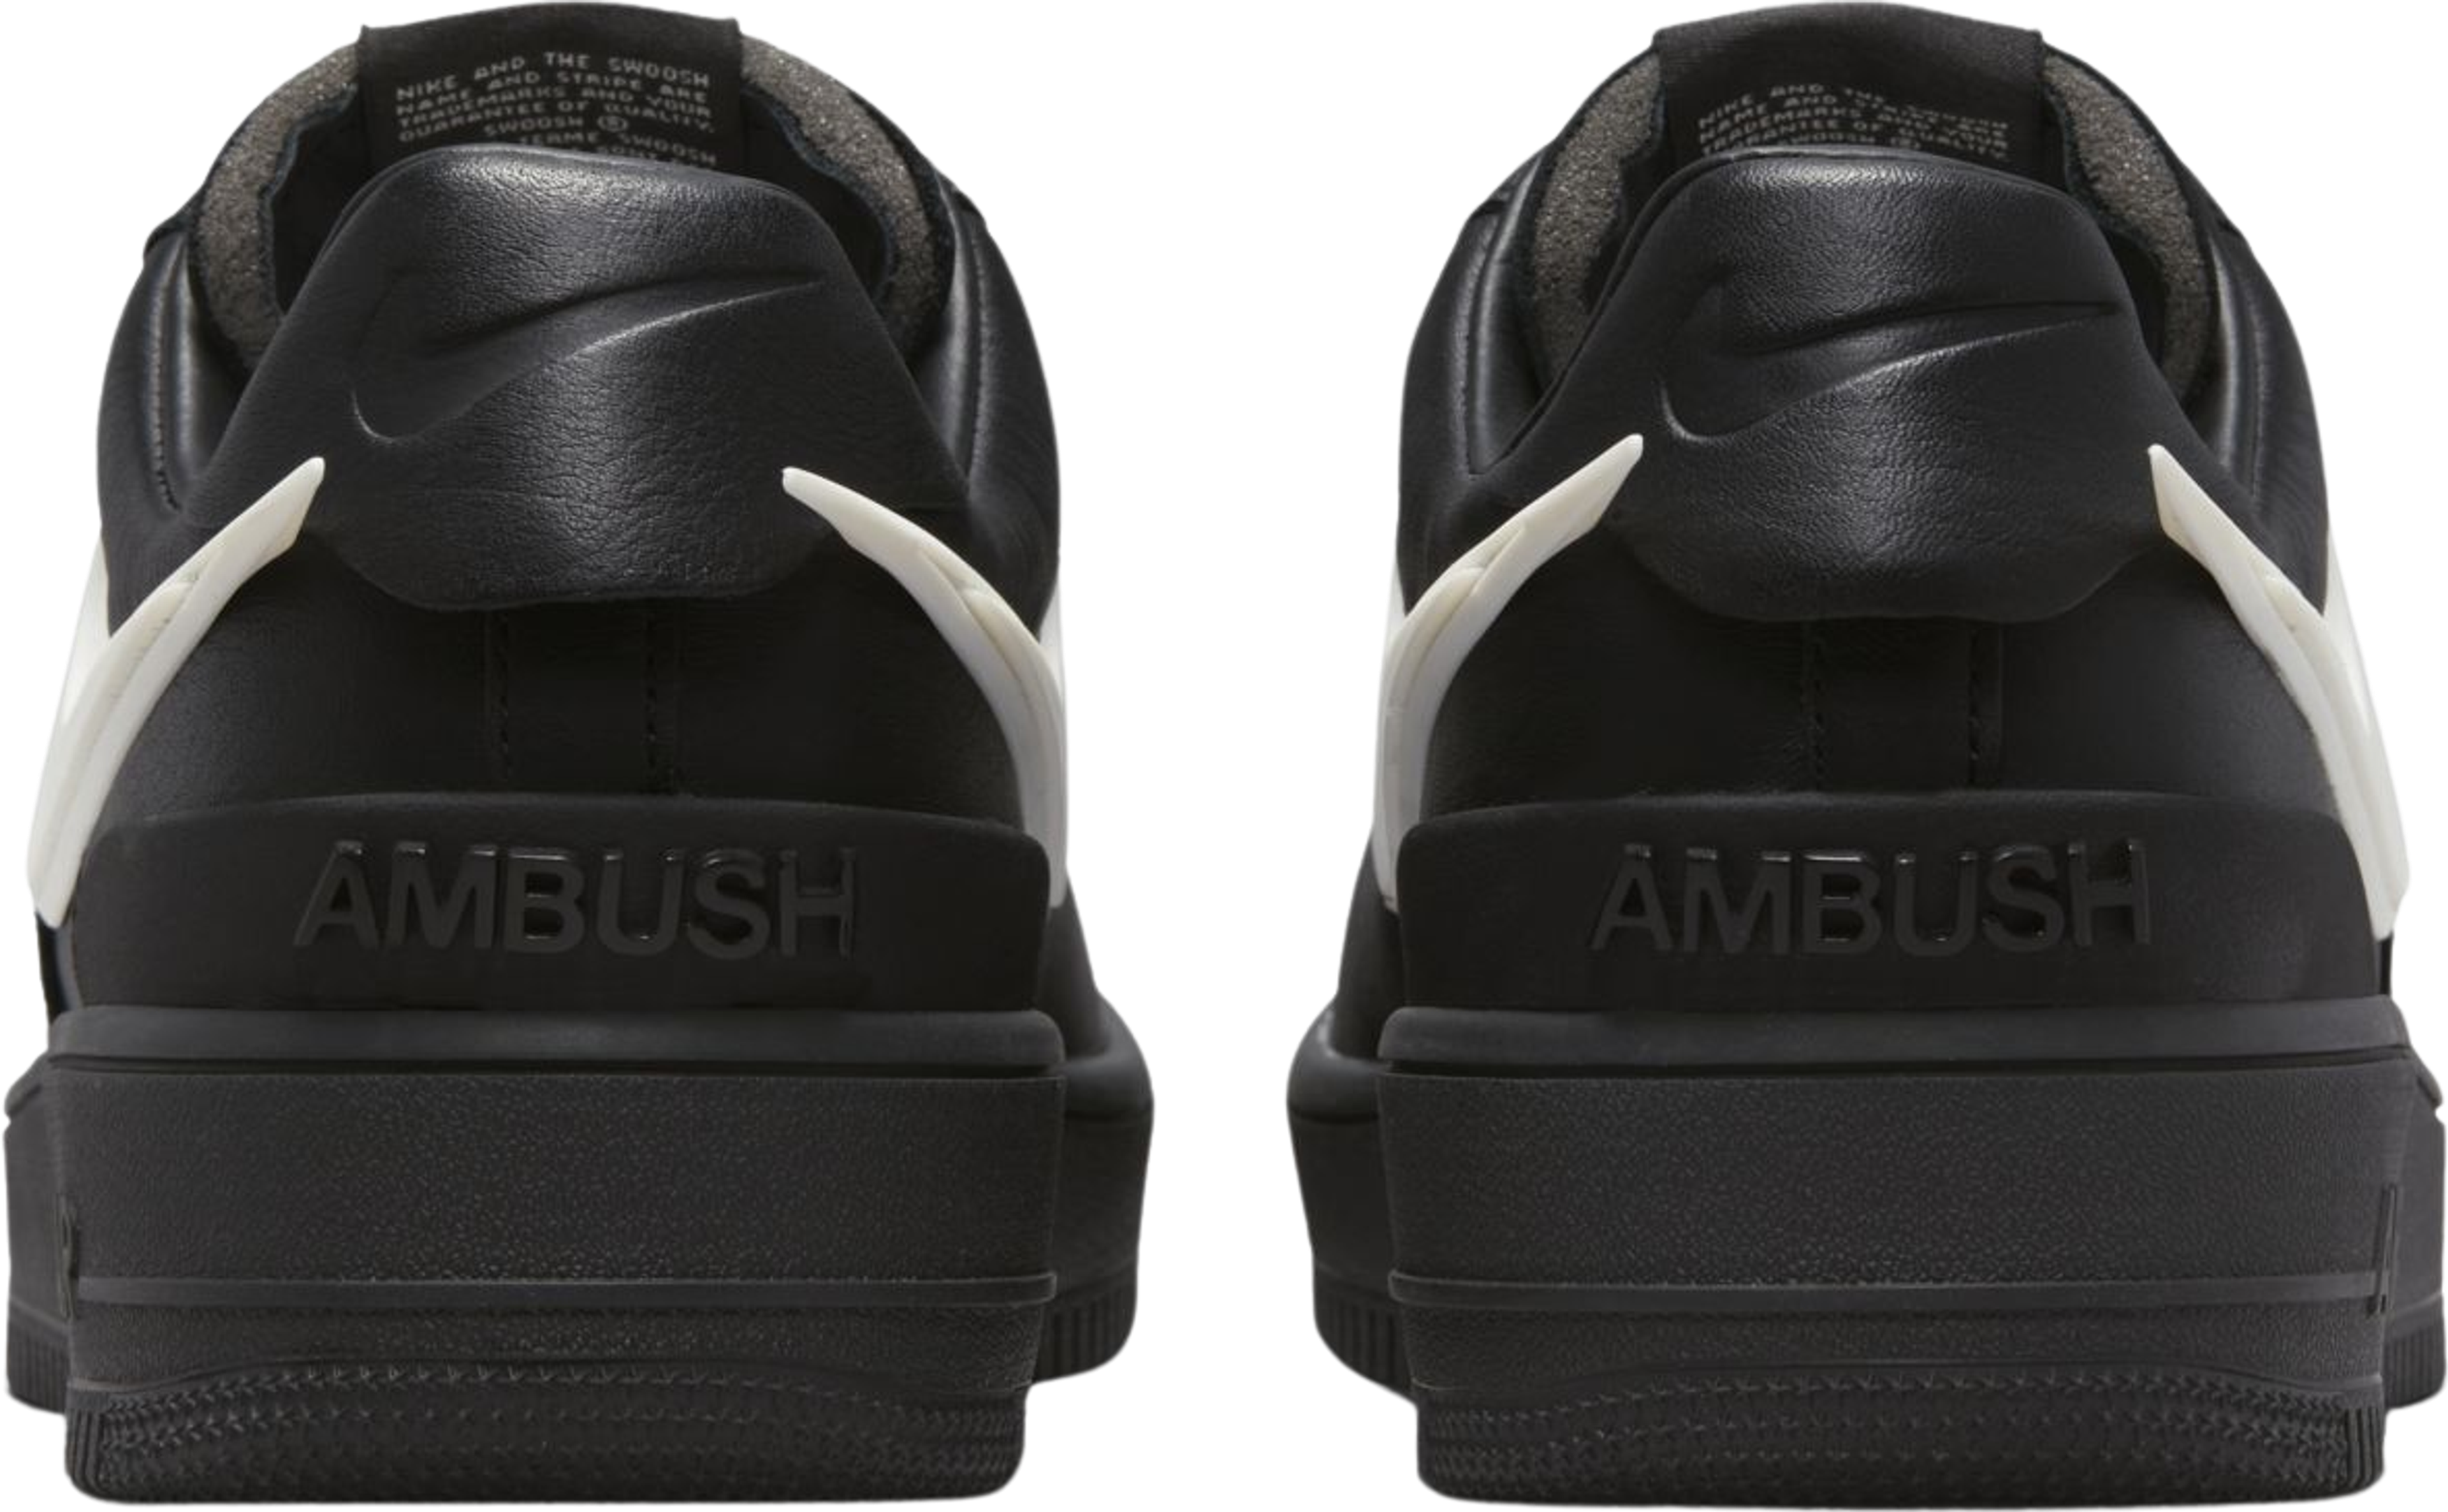 AMBUSH x Nike Air Force 1 Low On Foot Photos